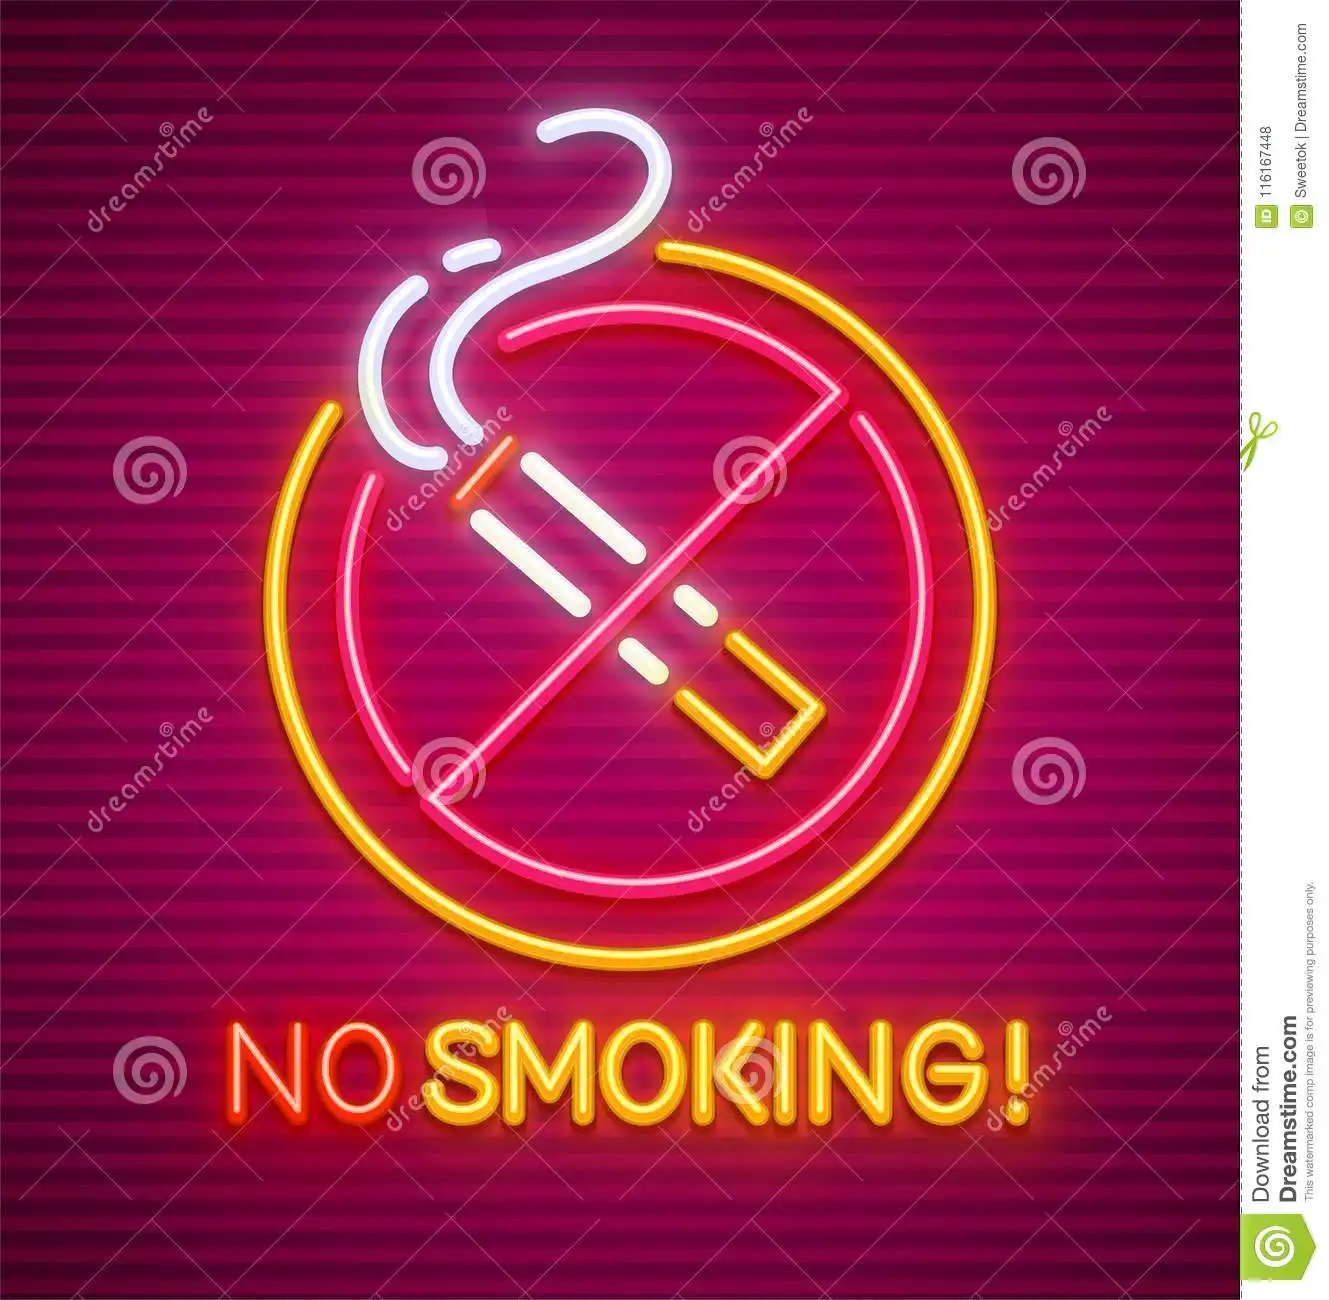 Good vibes only no smoking 12v flex led neon light sign